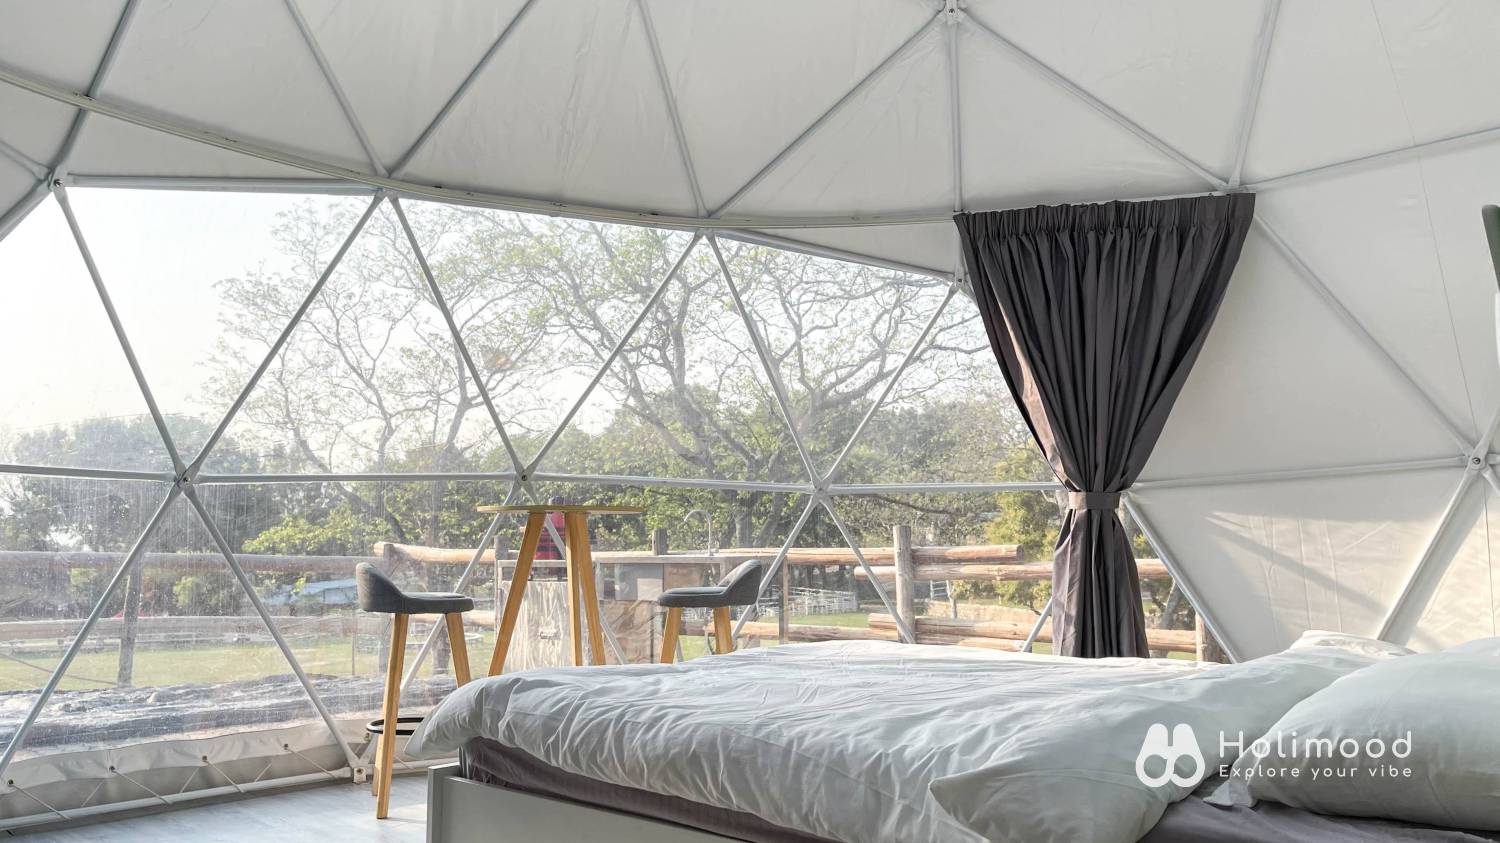 Sai Yuen Camping Adventure Park - Cheung Chau Campsite Cheung Chau Sai Yuen Stargazing tent -  Fantasy 15